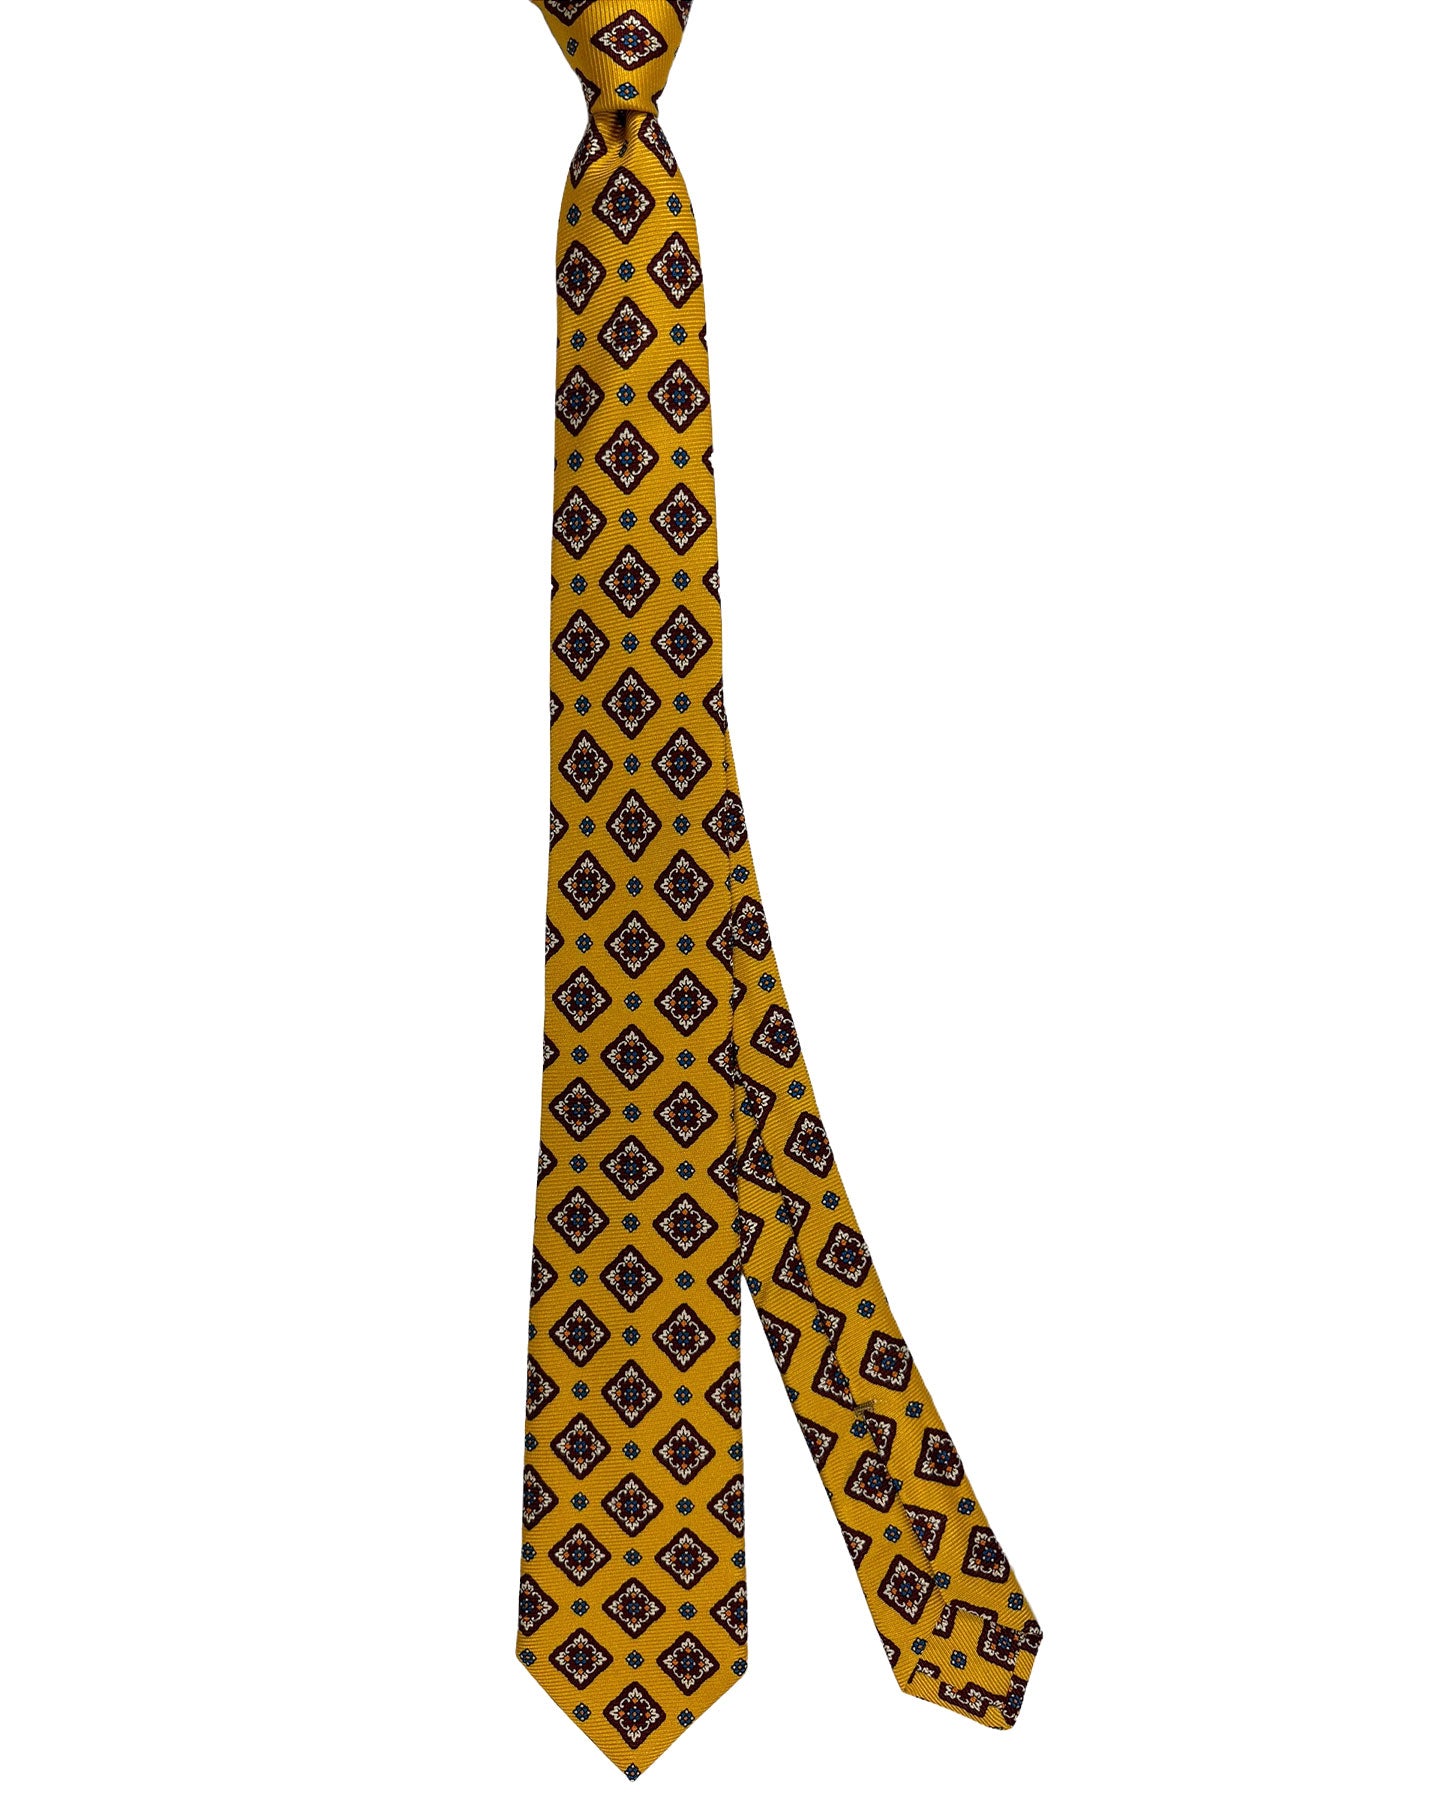 Kiton Tie Mustard Medallion Design - Sevenfold Necktie